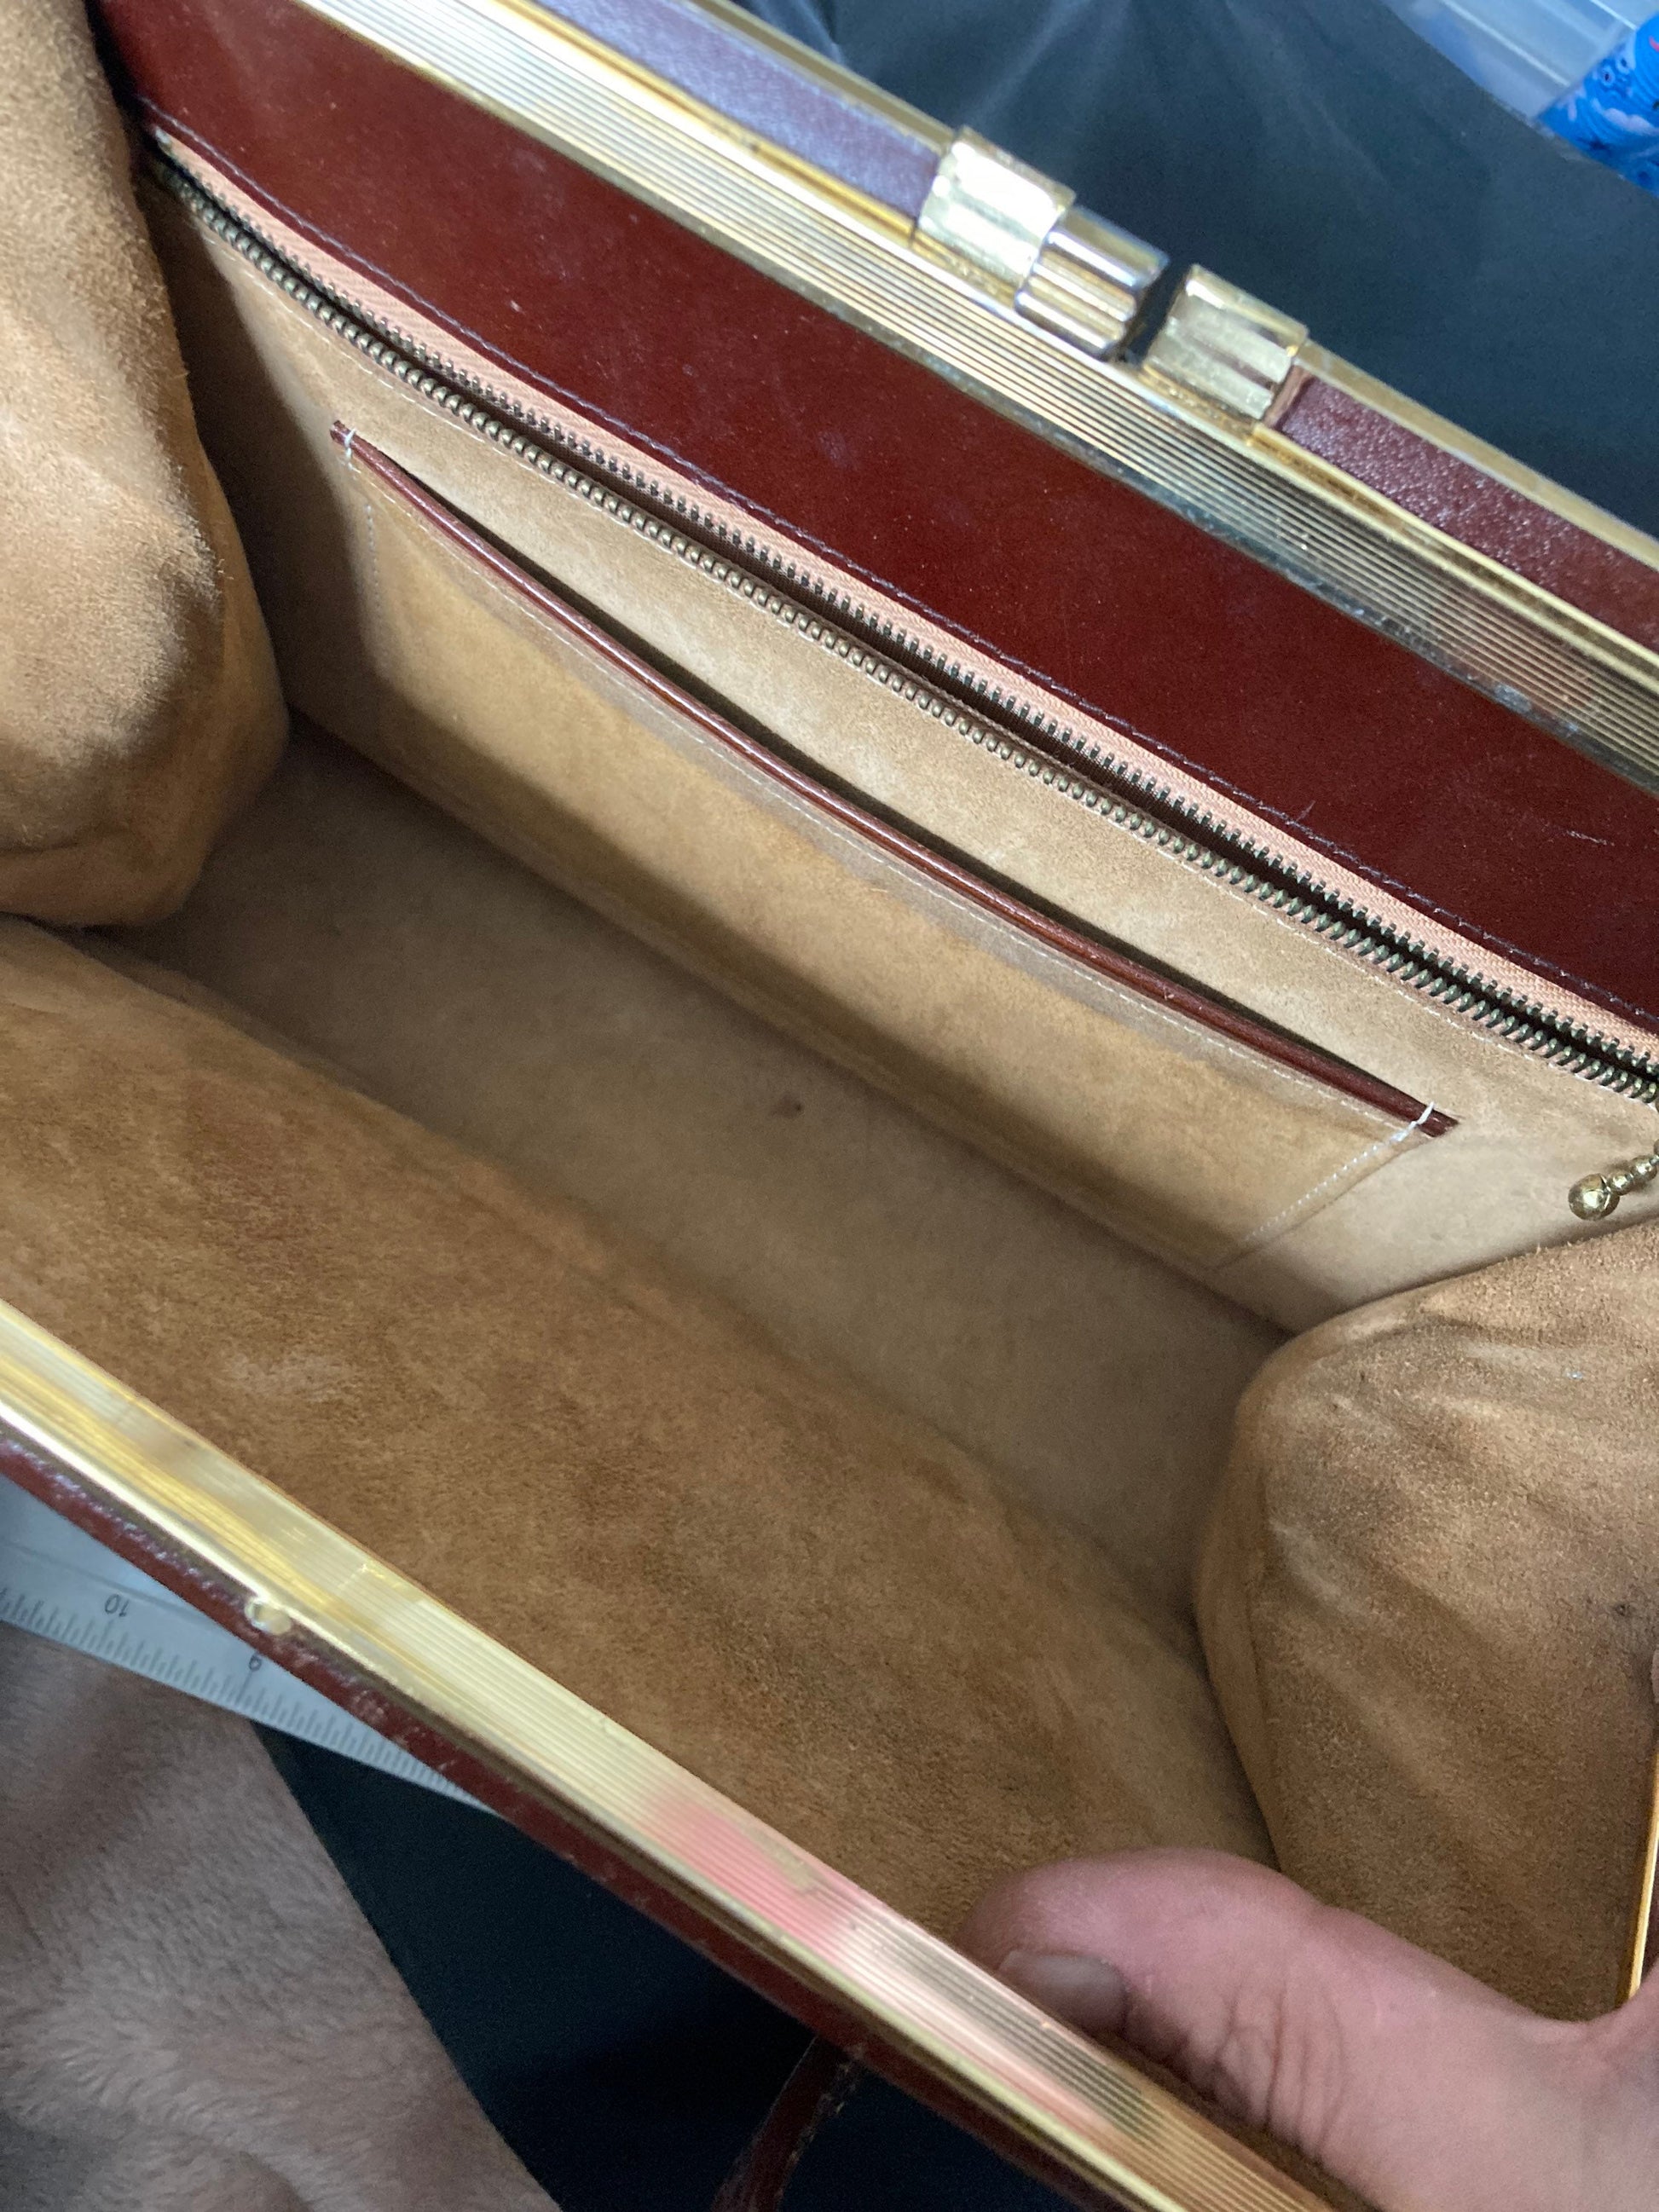 Vintage brown leather handbag beige suede lining gold metal clasp